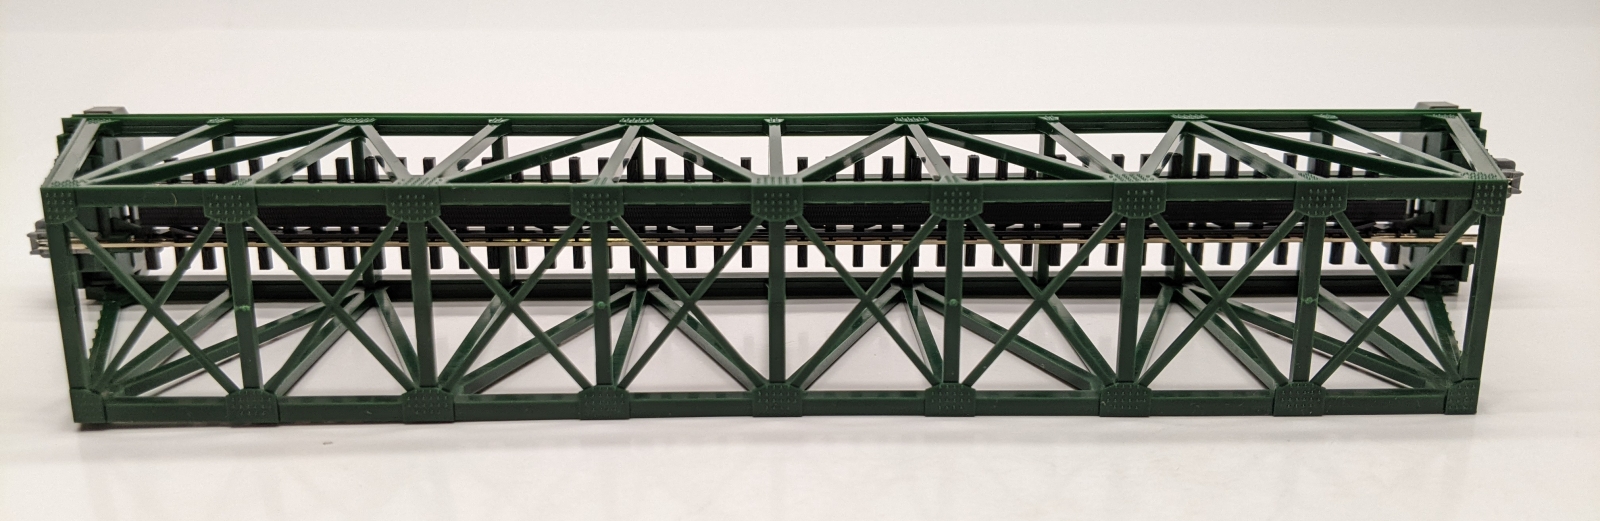 KATO 20-431 248mm 9 3/4 Single Truss Bridge S248t Scale N for sale online 